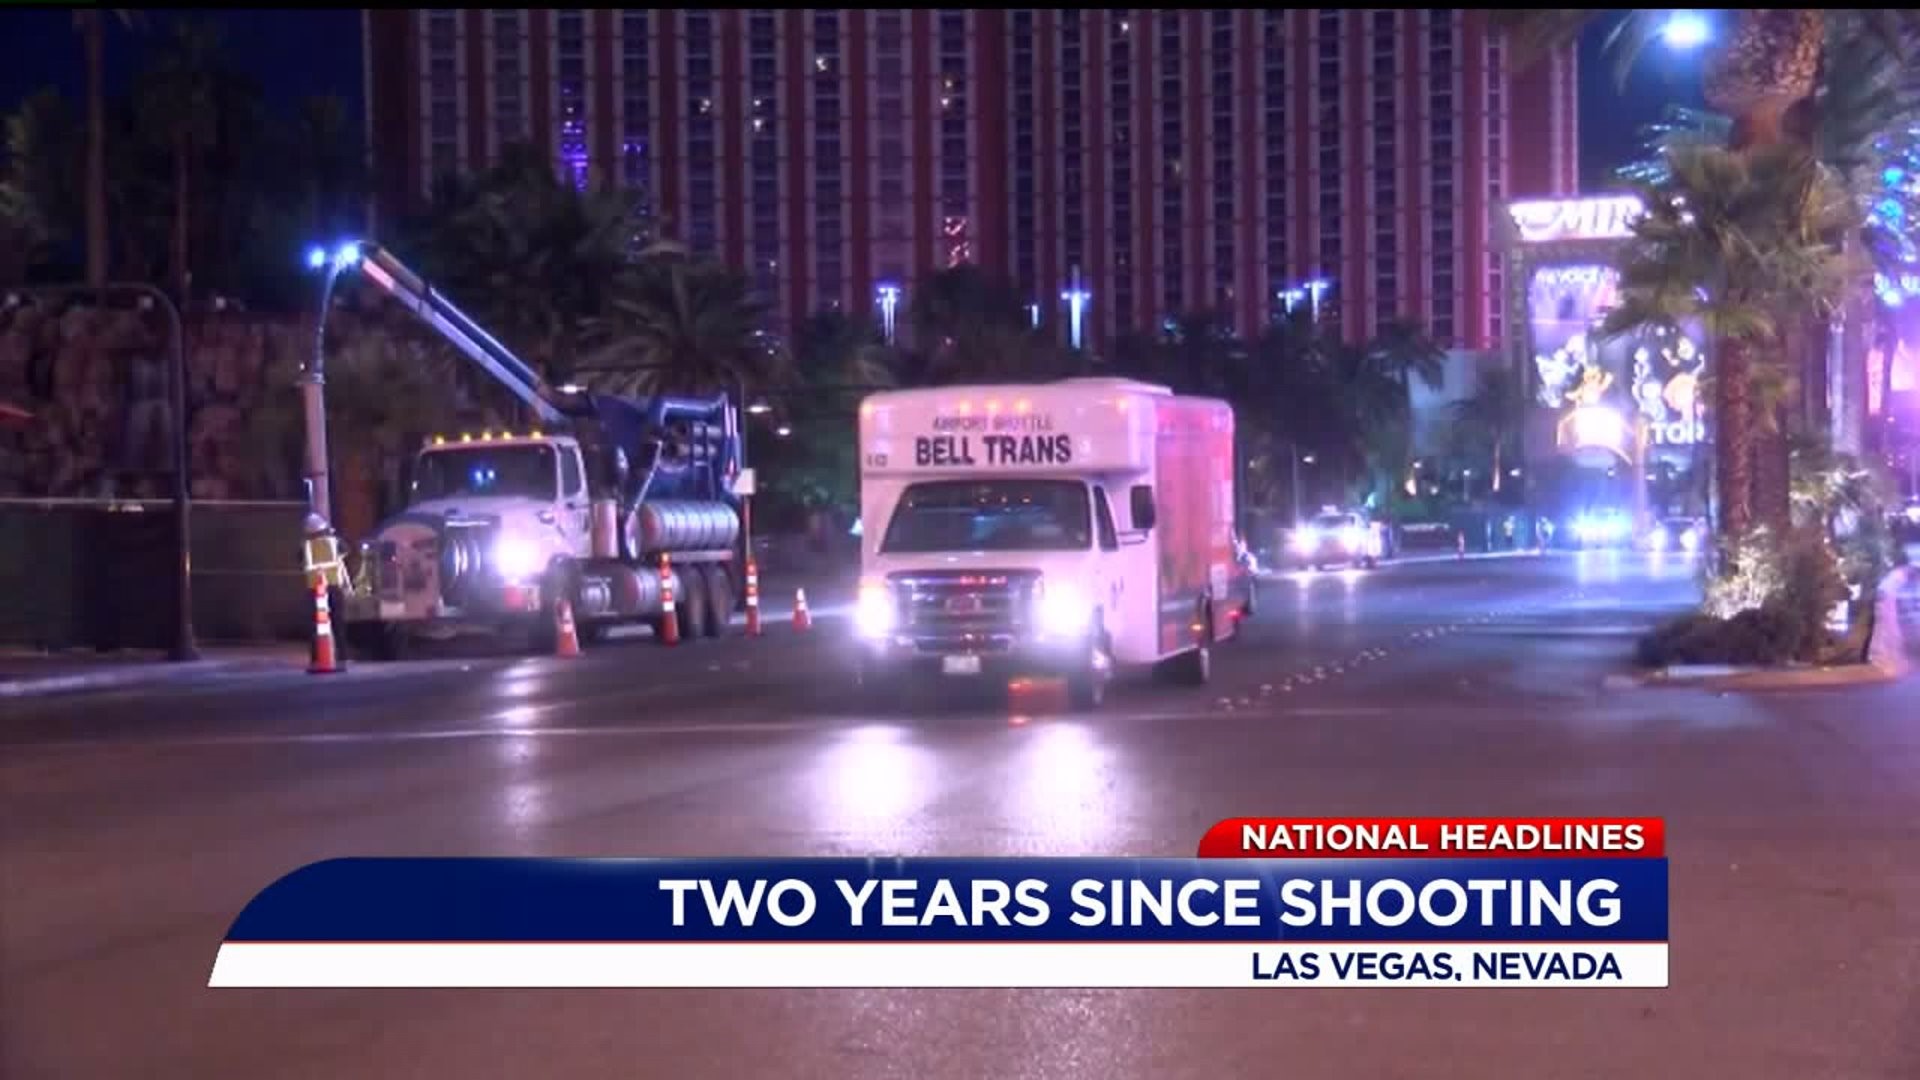 Las Vegas massacre anniversary sparks debate on gun control